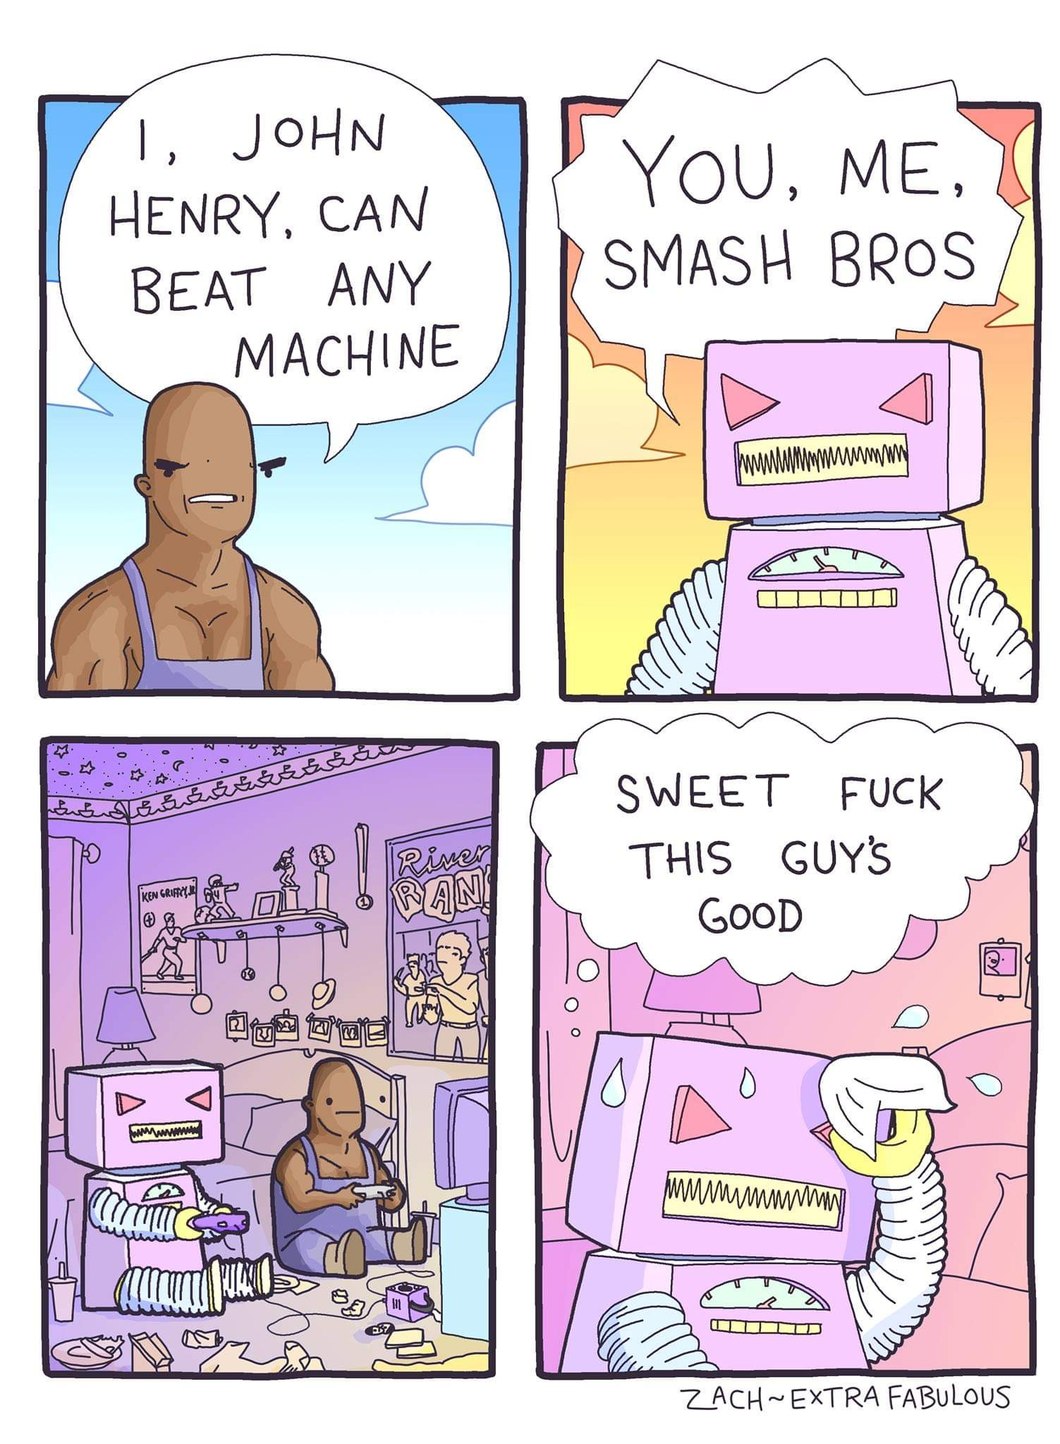 He can beat any machine - meme